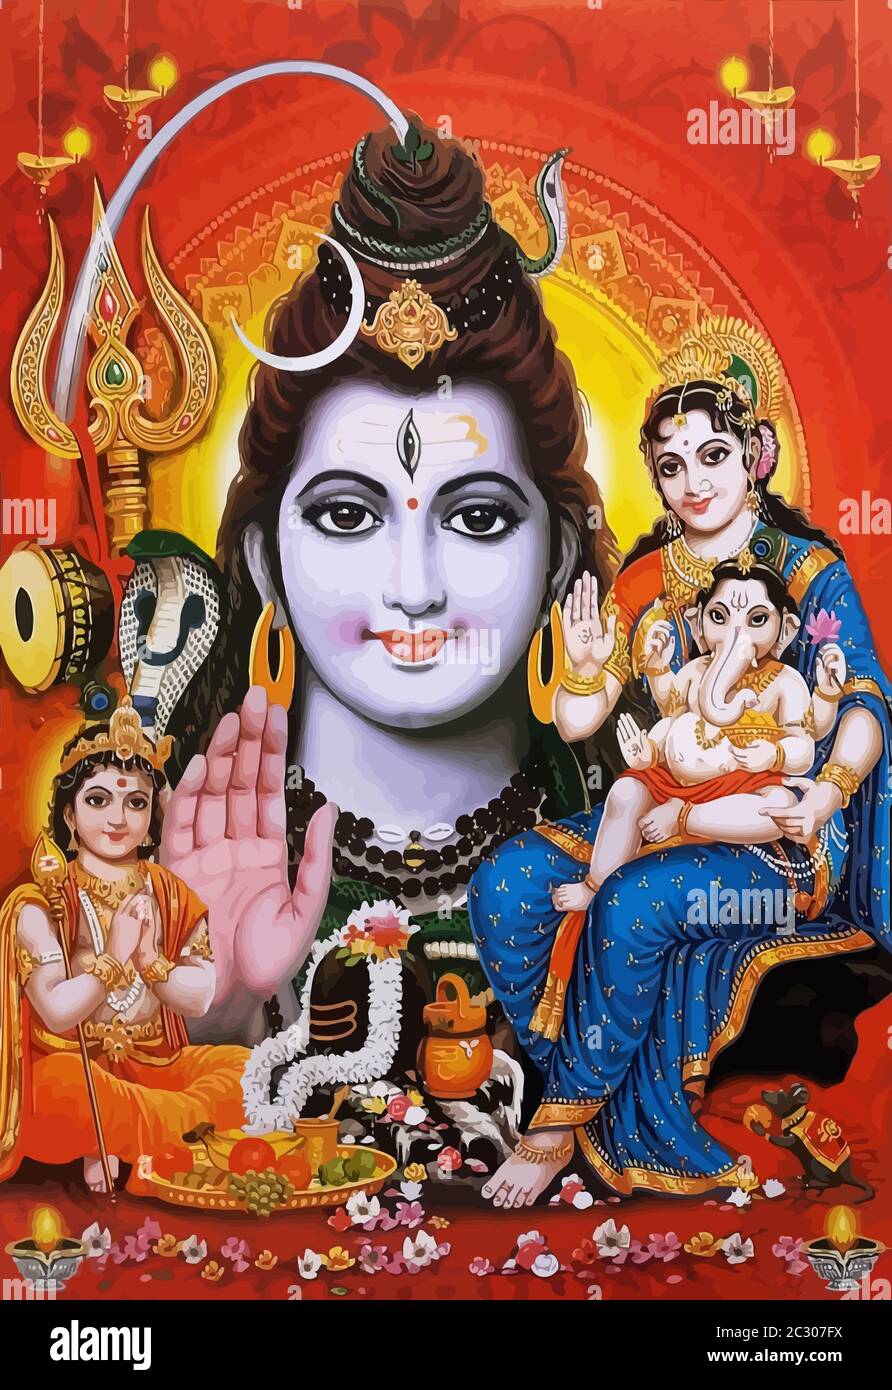 hinduism lord shiva spiritual Lakshmi illustration ganesha Stock ...